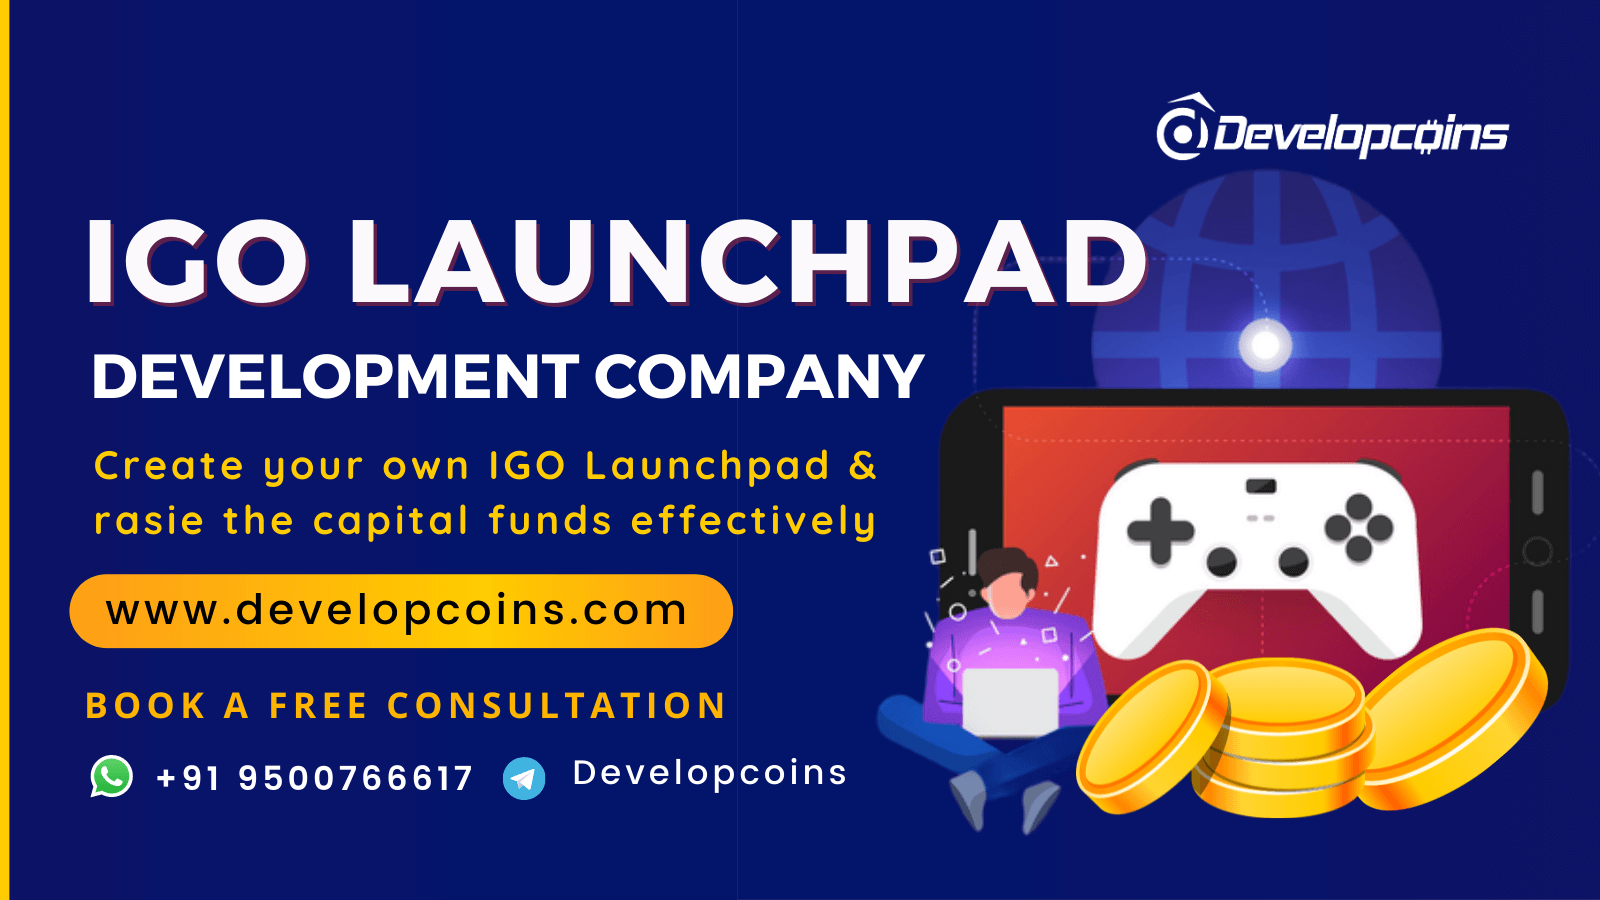 Article about IGO Launchpad Development Company